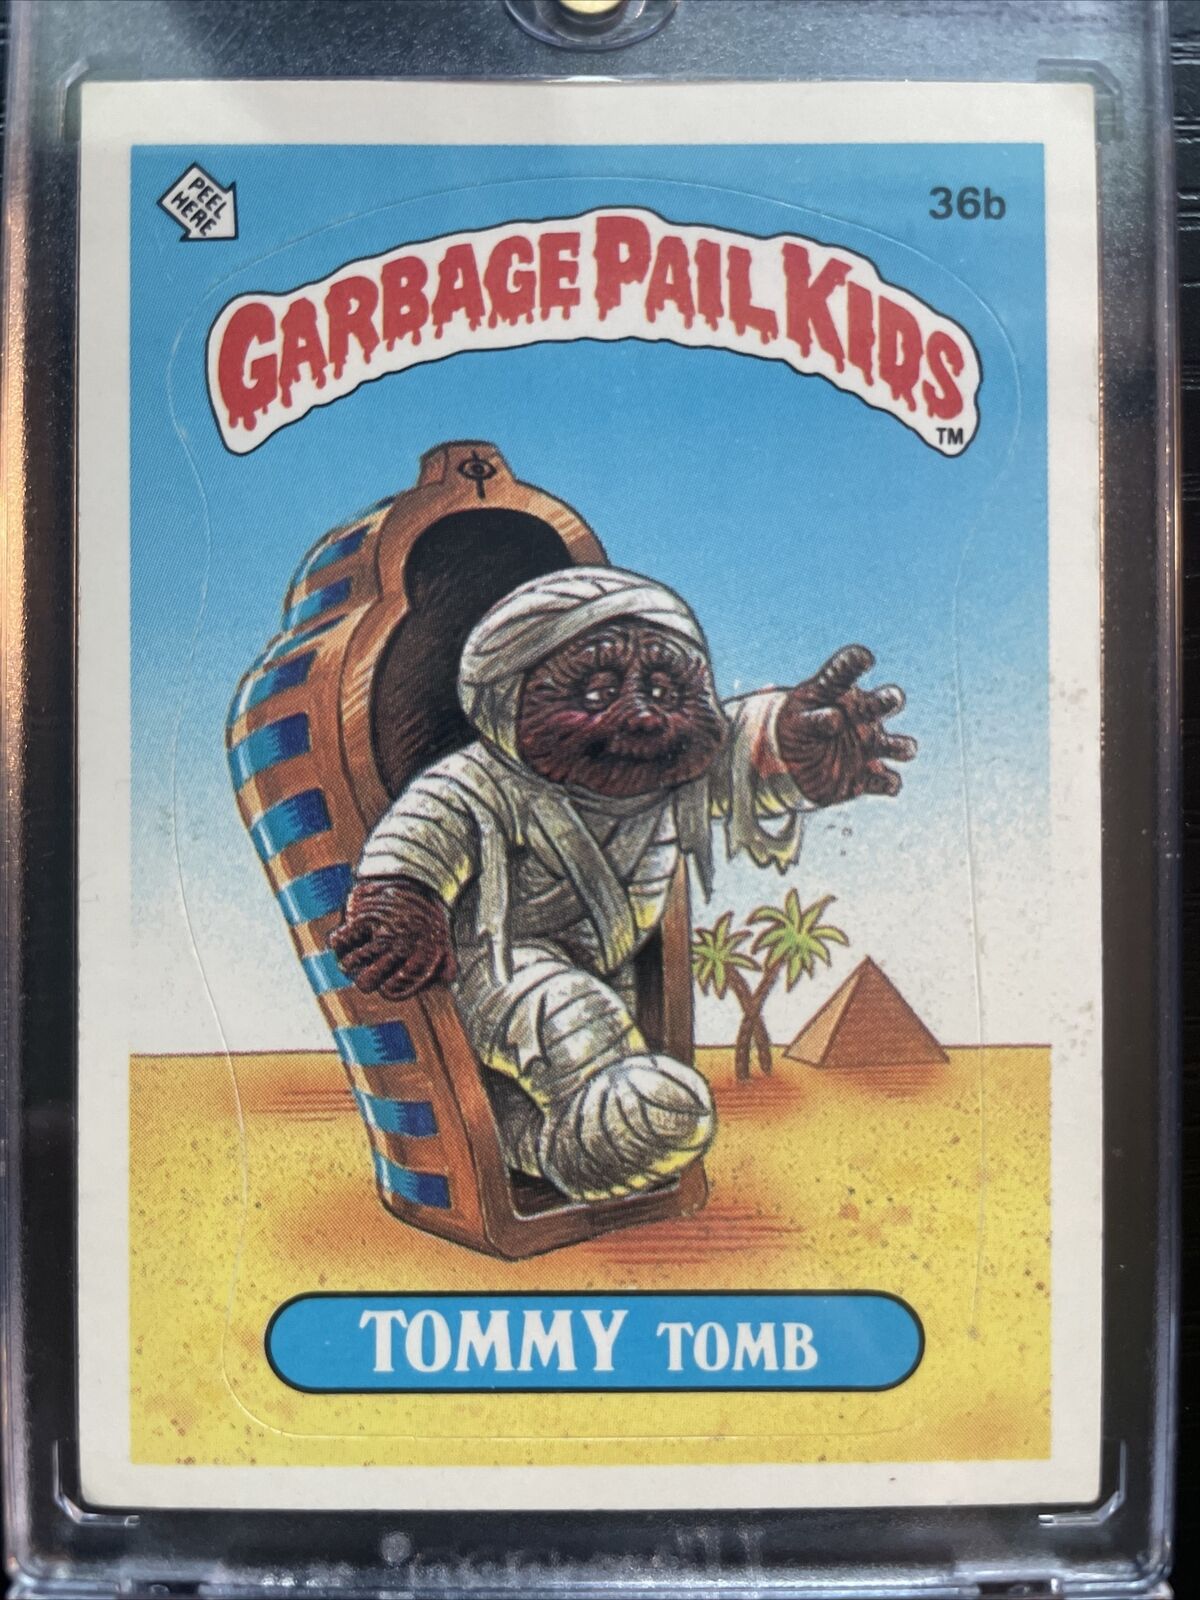 1985 Topps Garbage Pail Kids 1st Series 1 Matte Back Card 36b Tommy Tomb